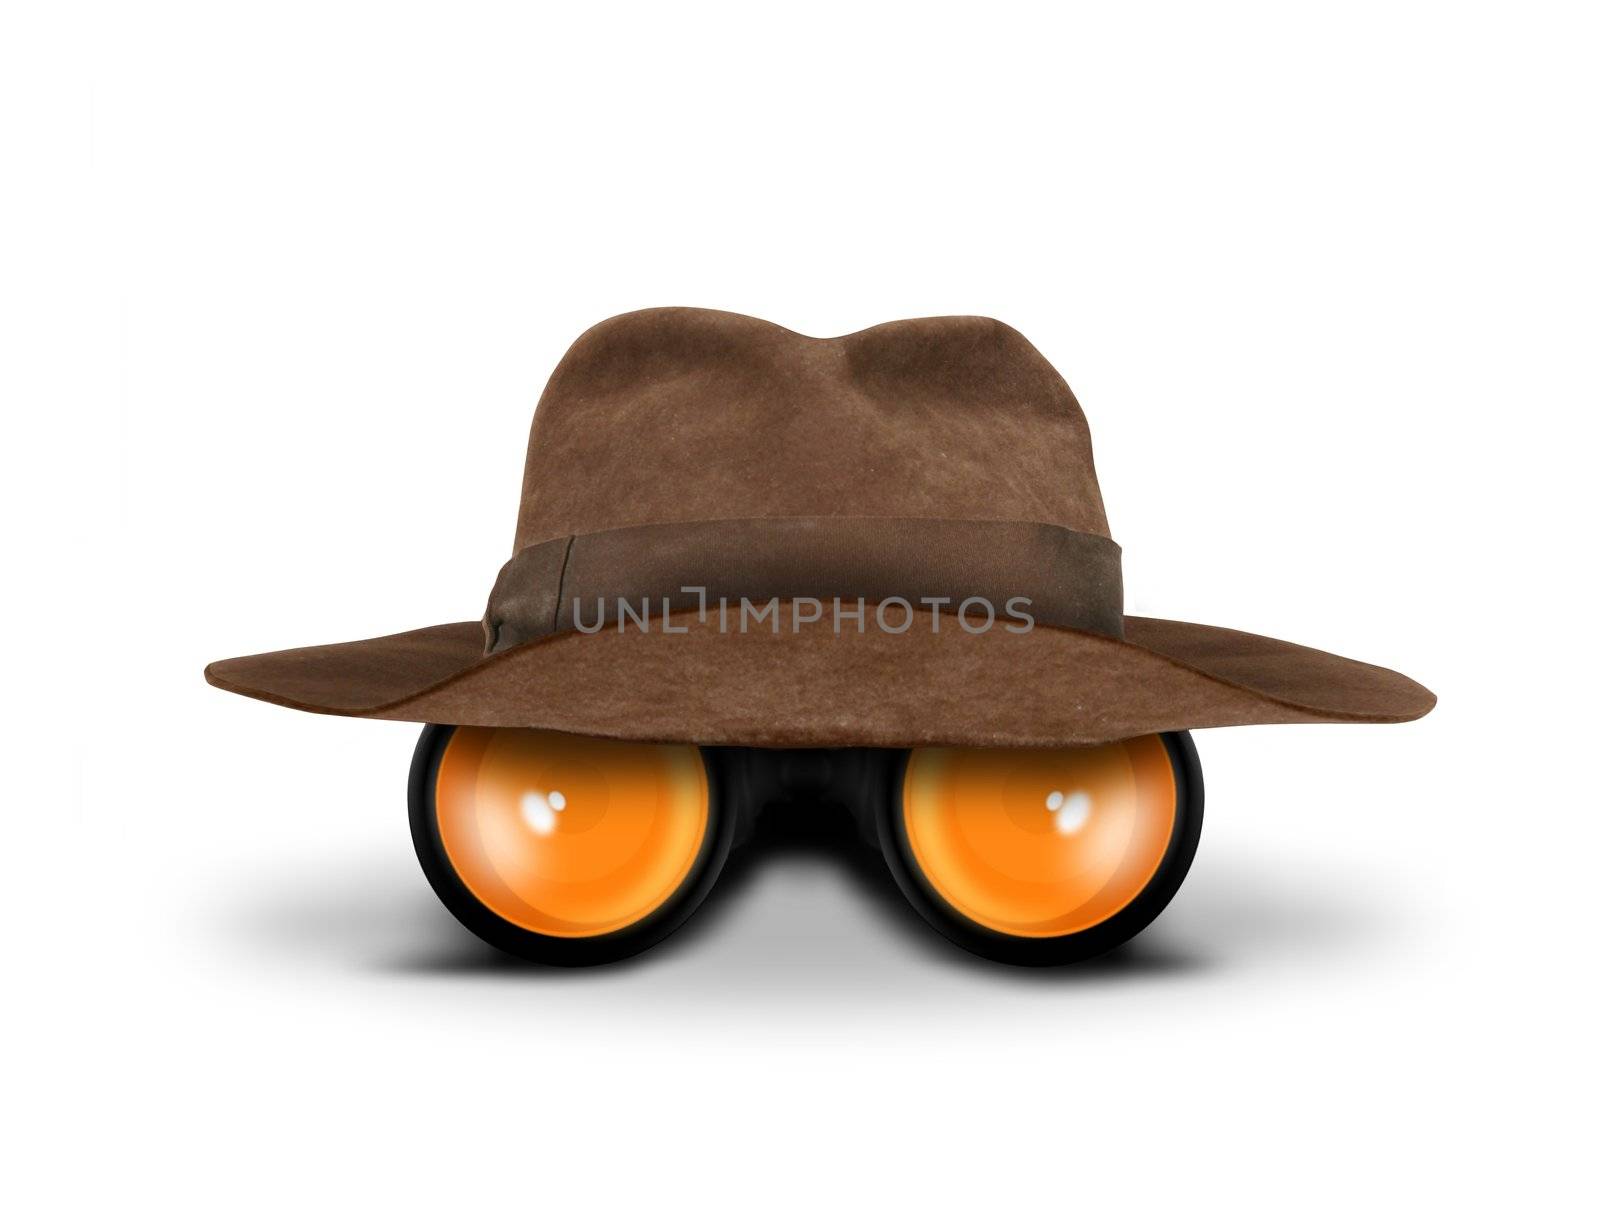 Hunters hat and binocular by razihusin